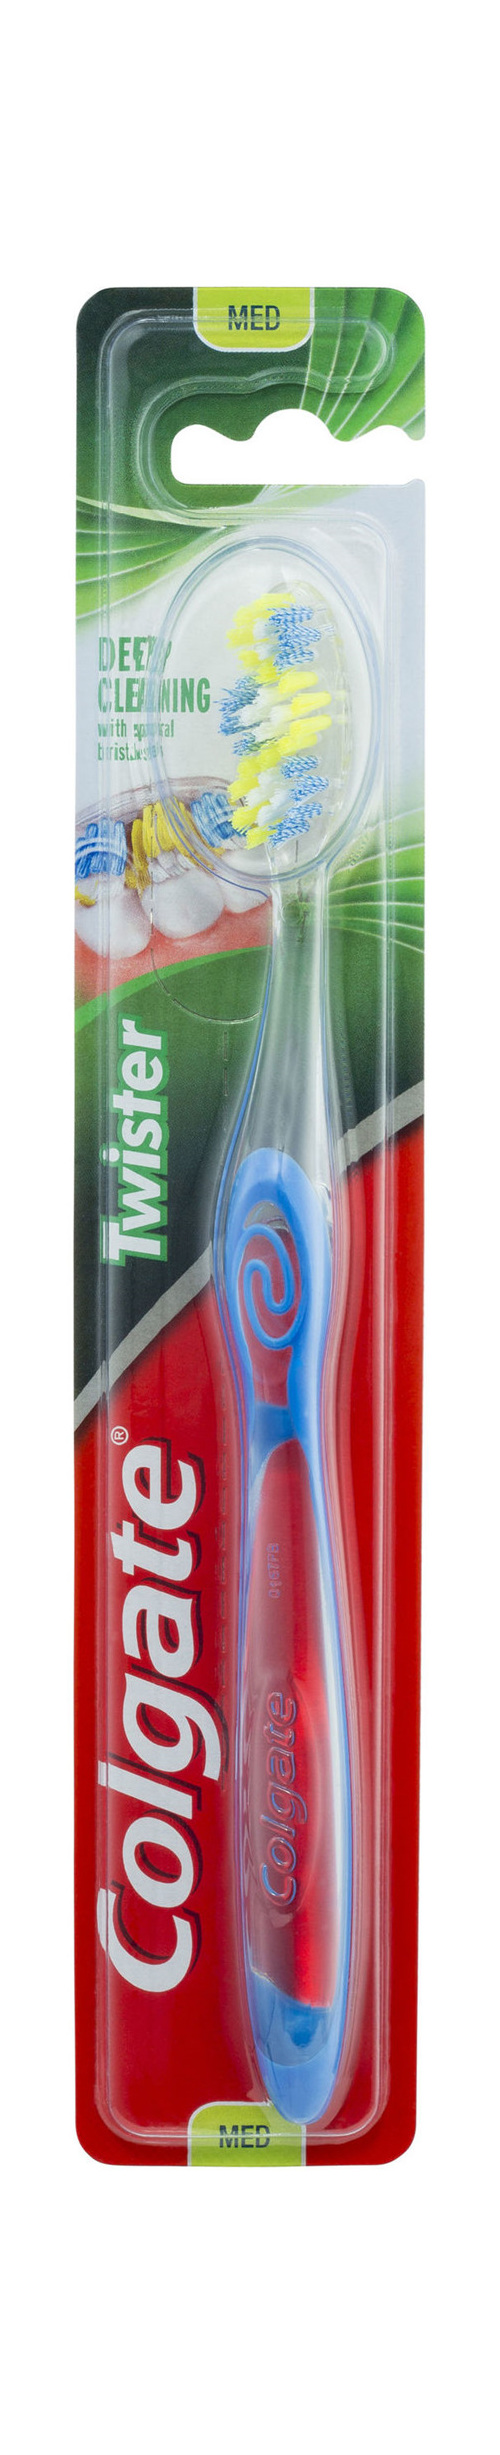 Colgate Twister Manual Toothbrush, 1 Pack, Medium Spiral Bristles, Deep Cleaning